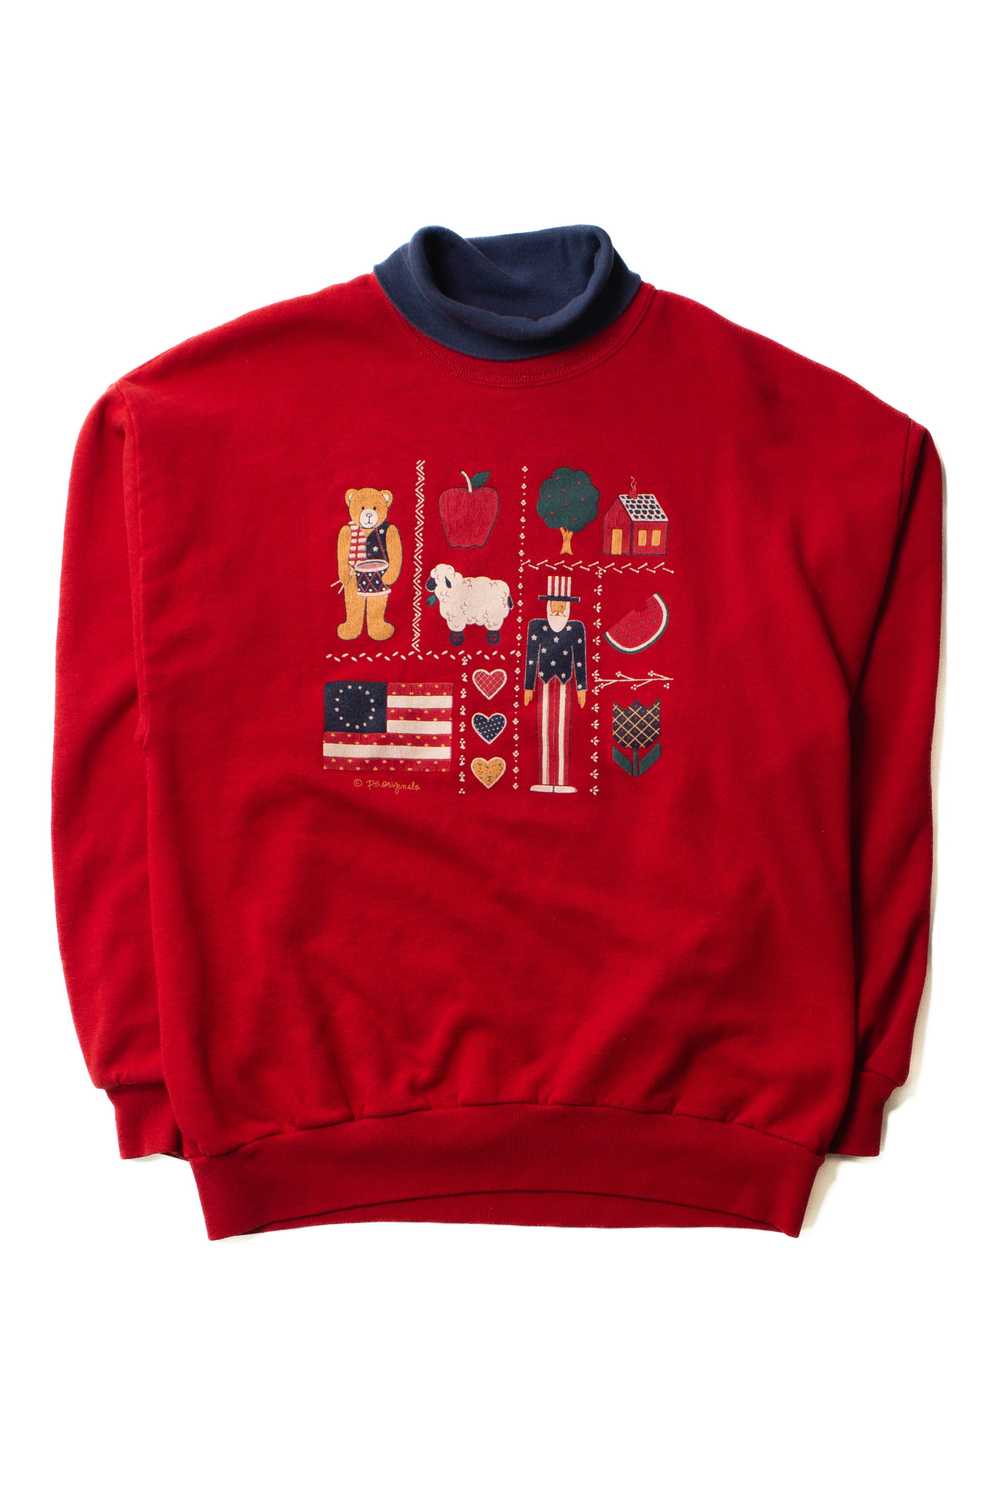 Vintage Red USA Turtleneck Sweatshirt (1990s) - image 1